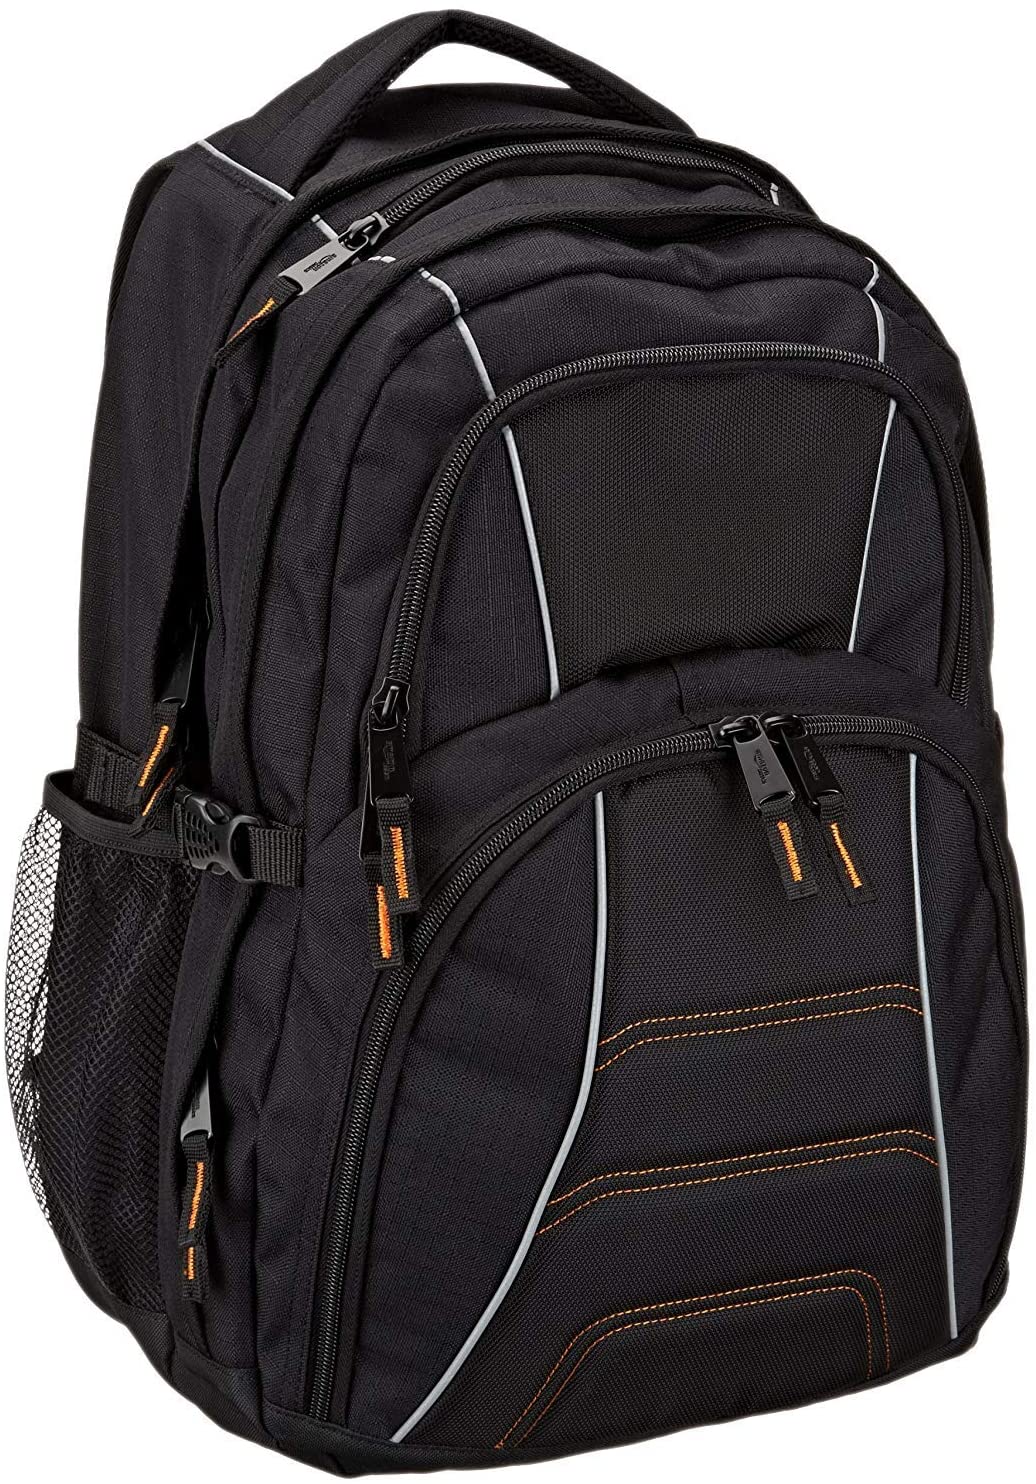 AmazonBasics Laptop Computer Backpack With Pockets